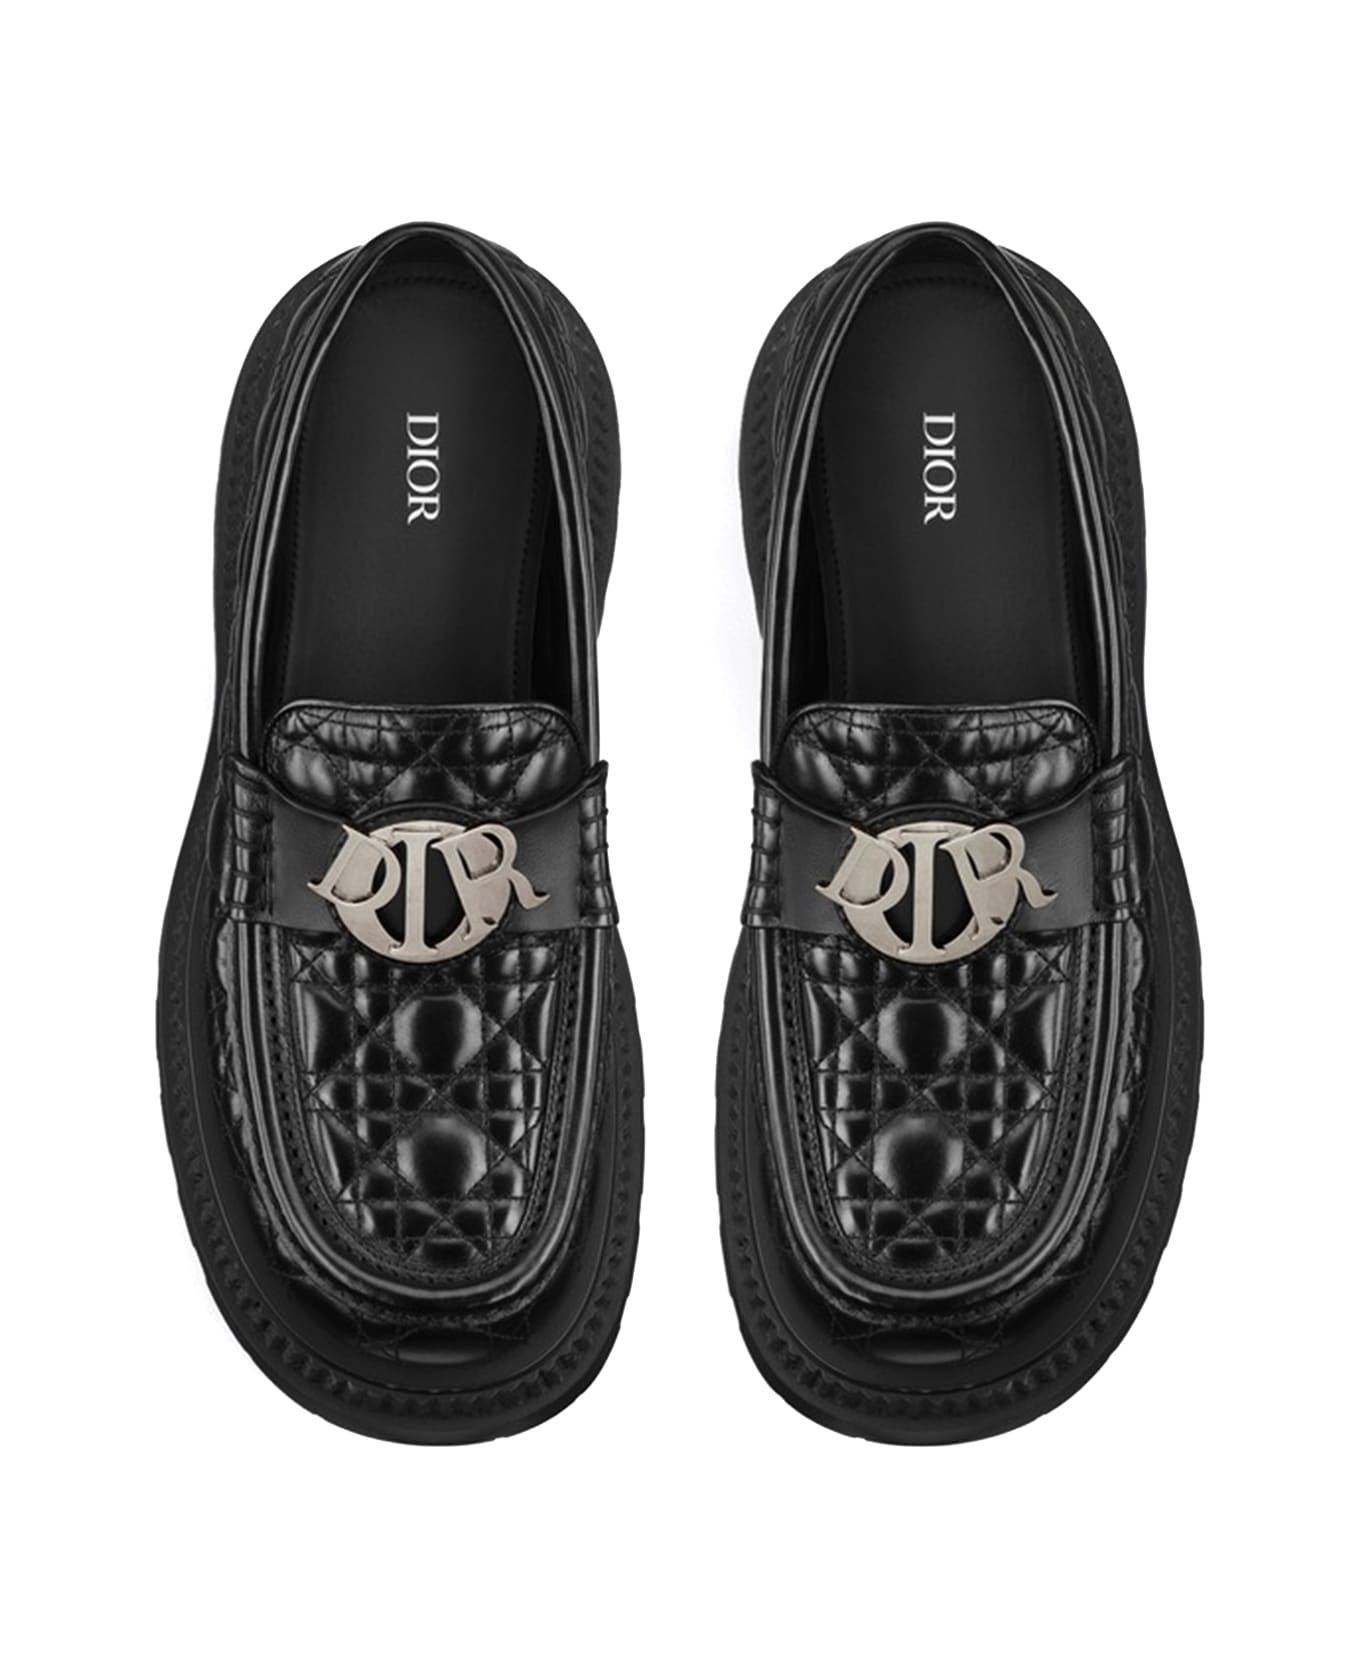 Dior Homme Loafers - BLACK